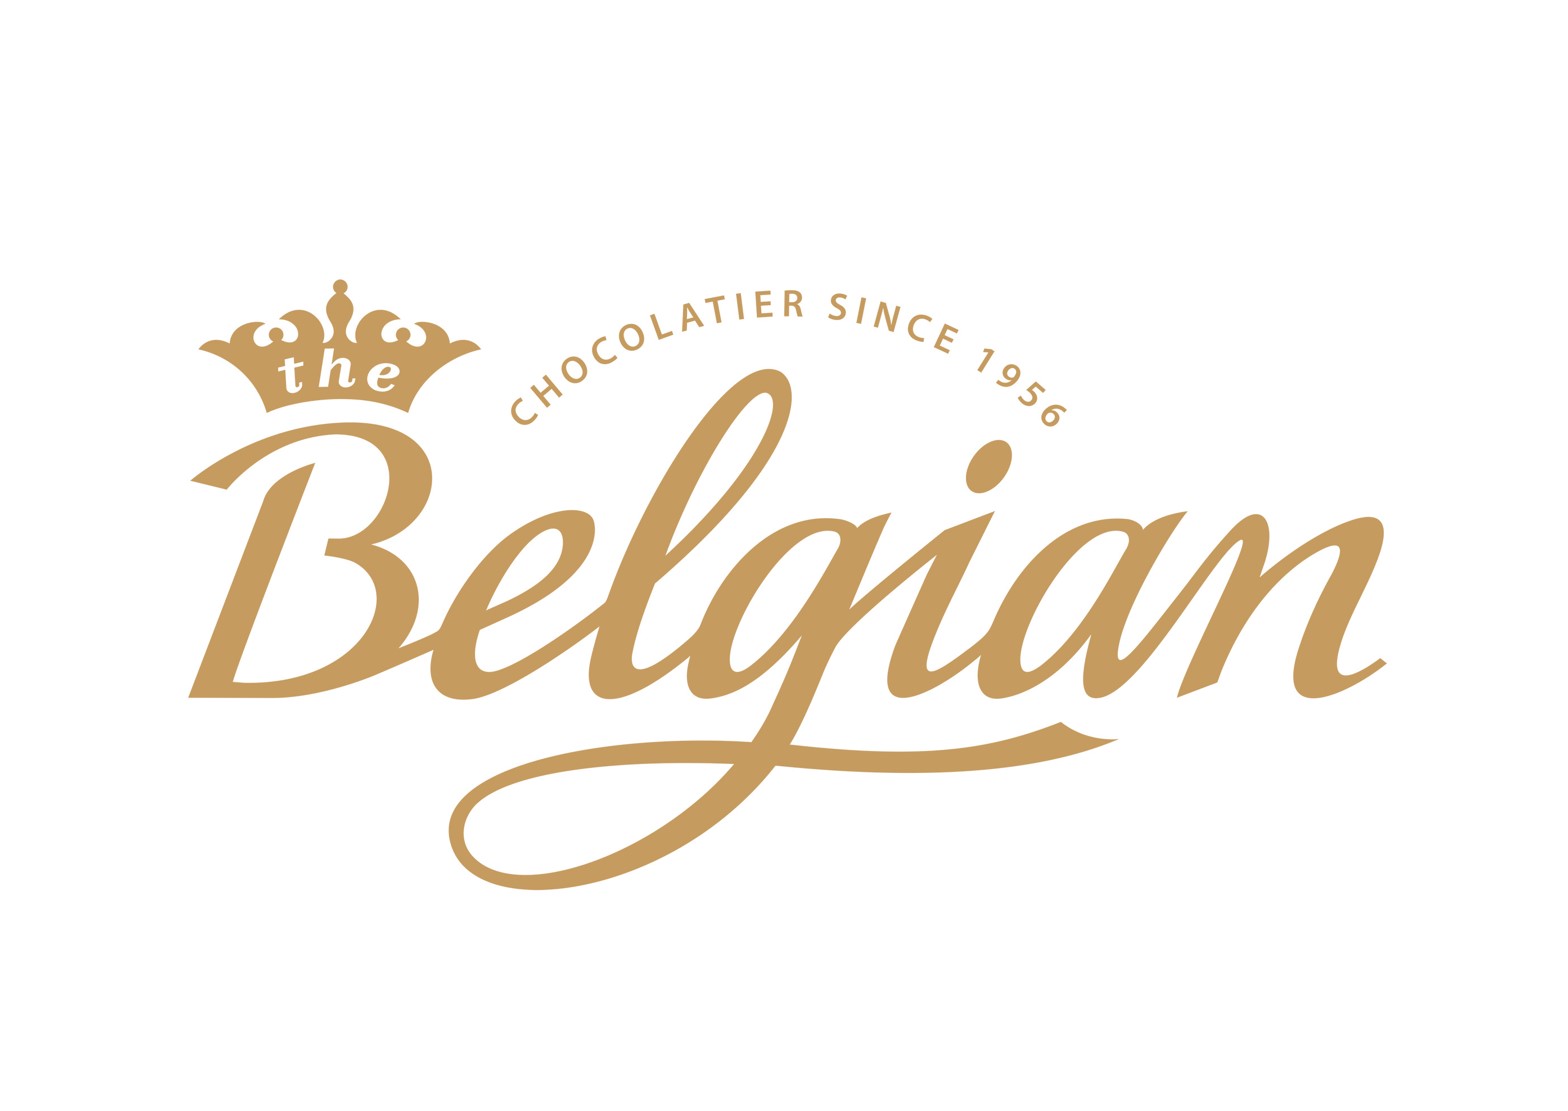 The Belgian